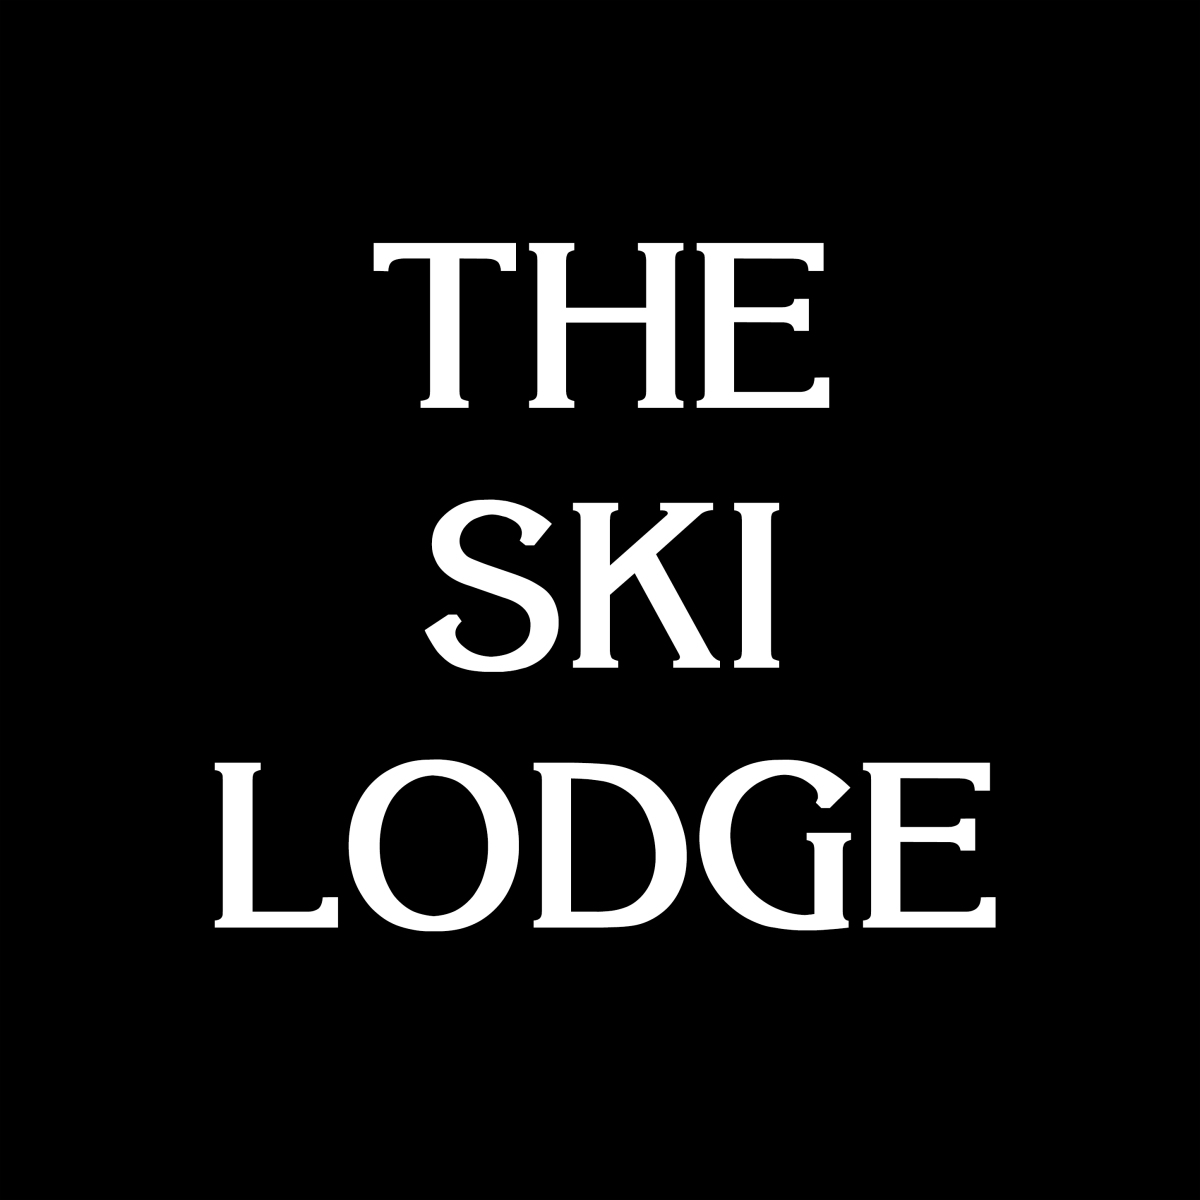 The Ski Lodge